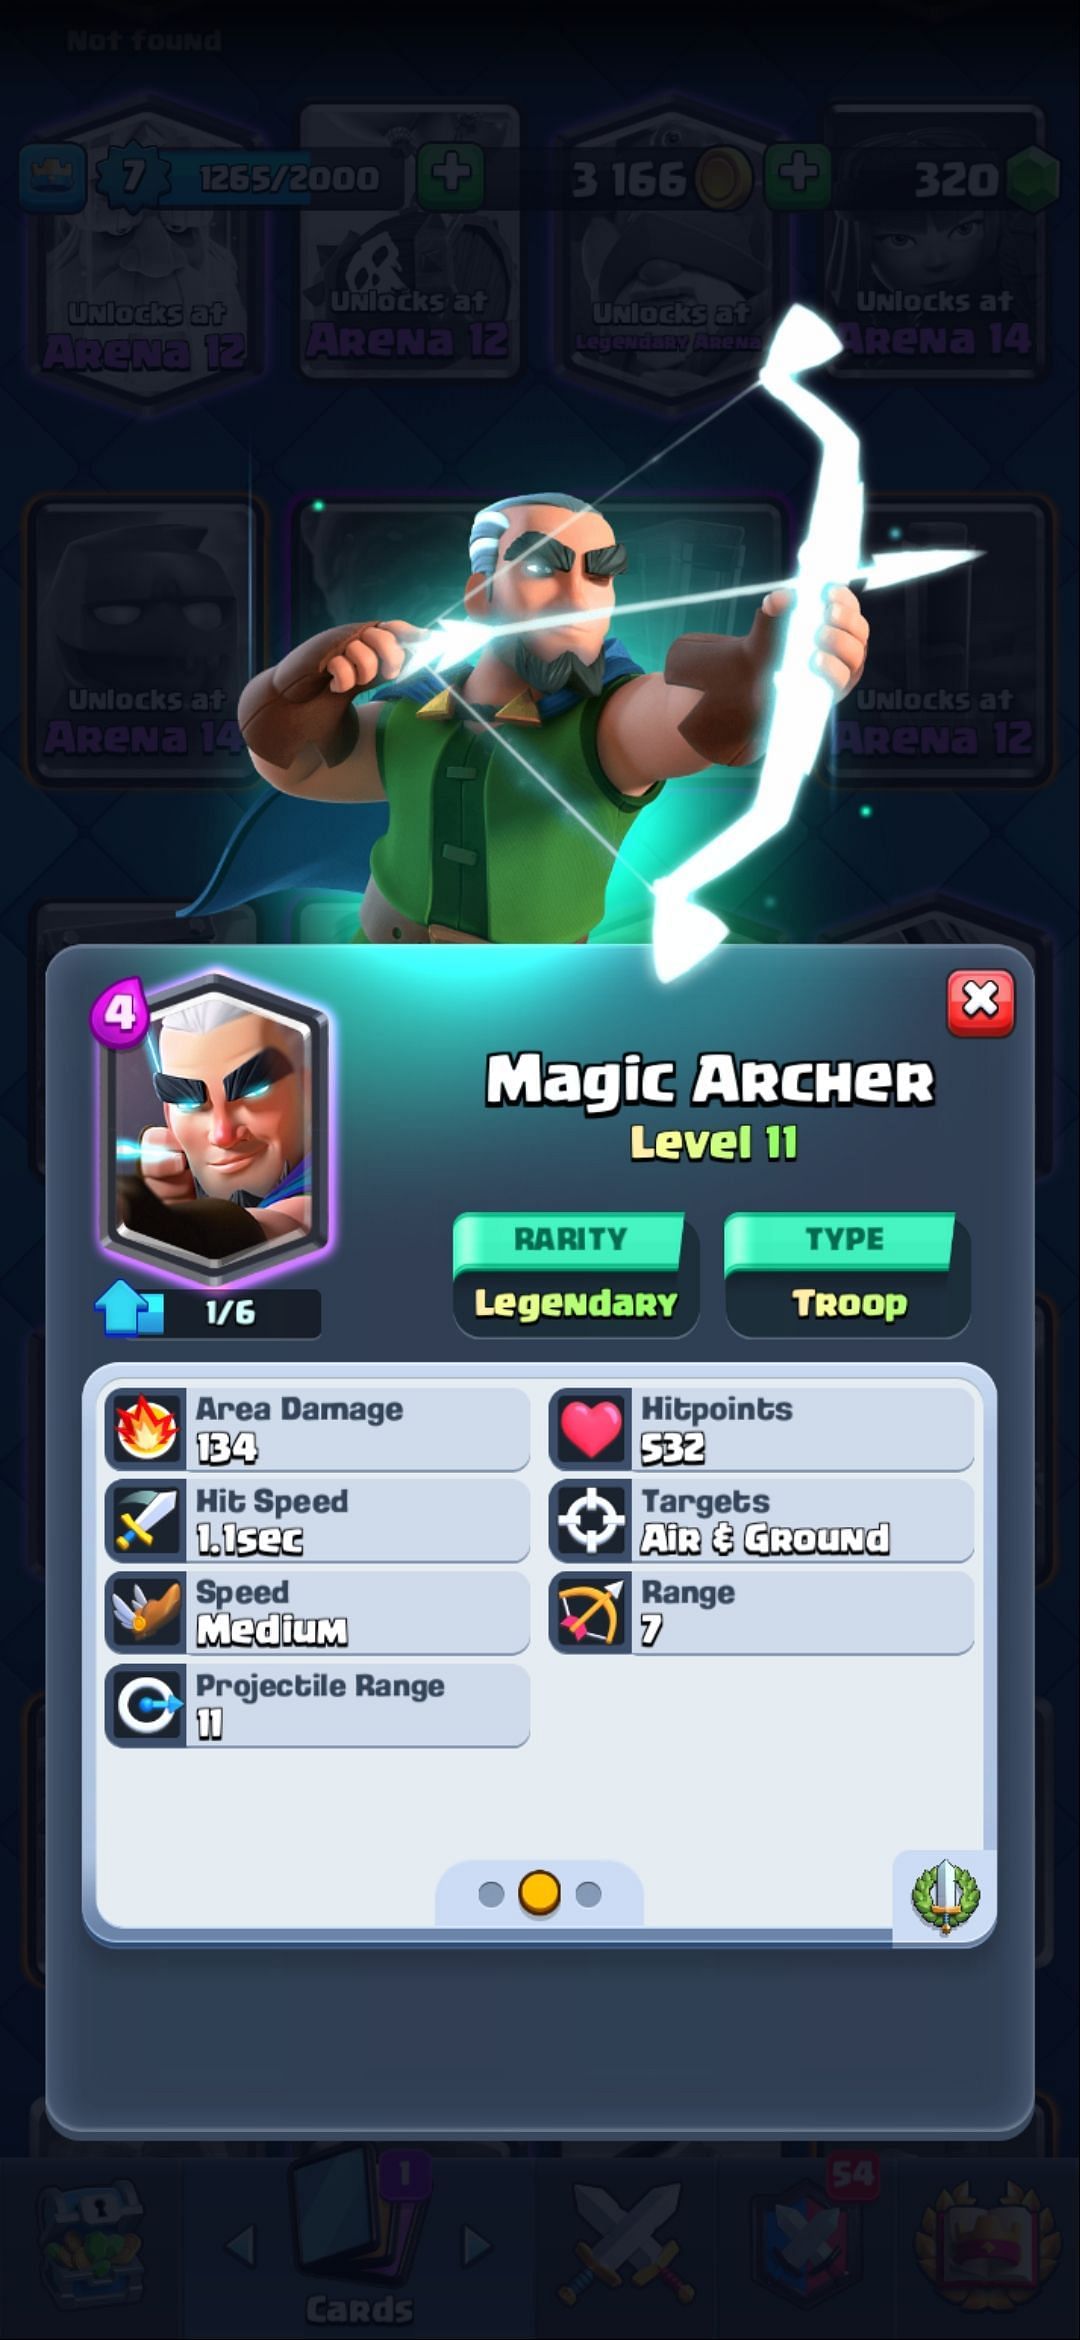 Statistics of the Magic Archer (Image via Sportskeeda)